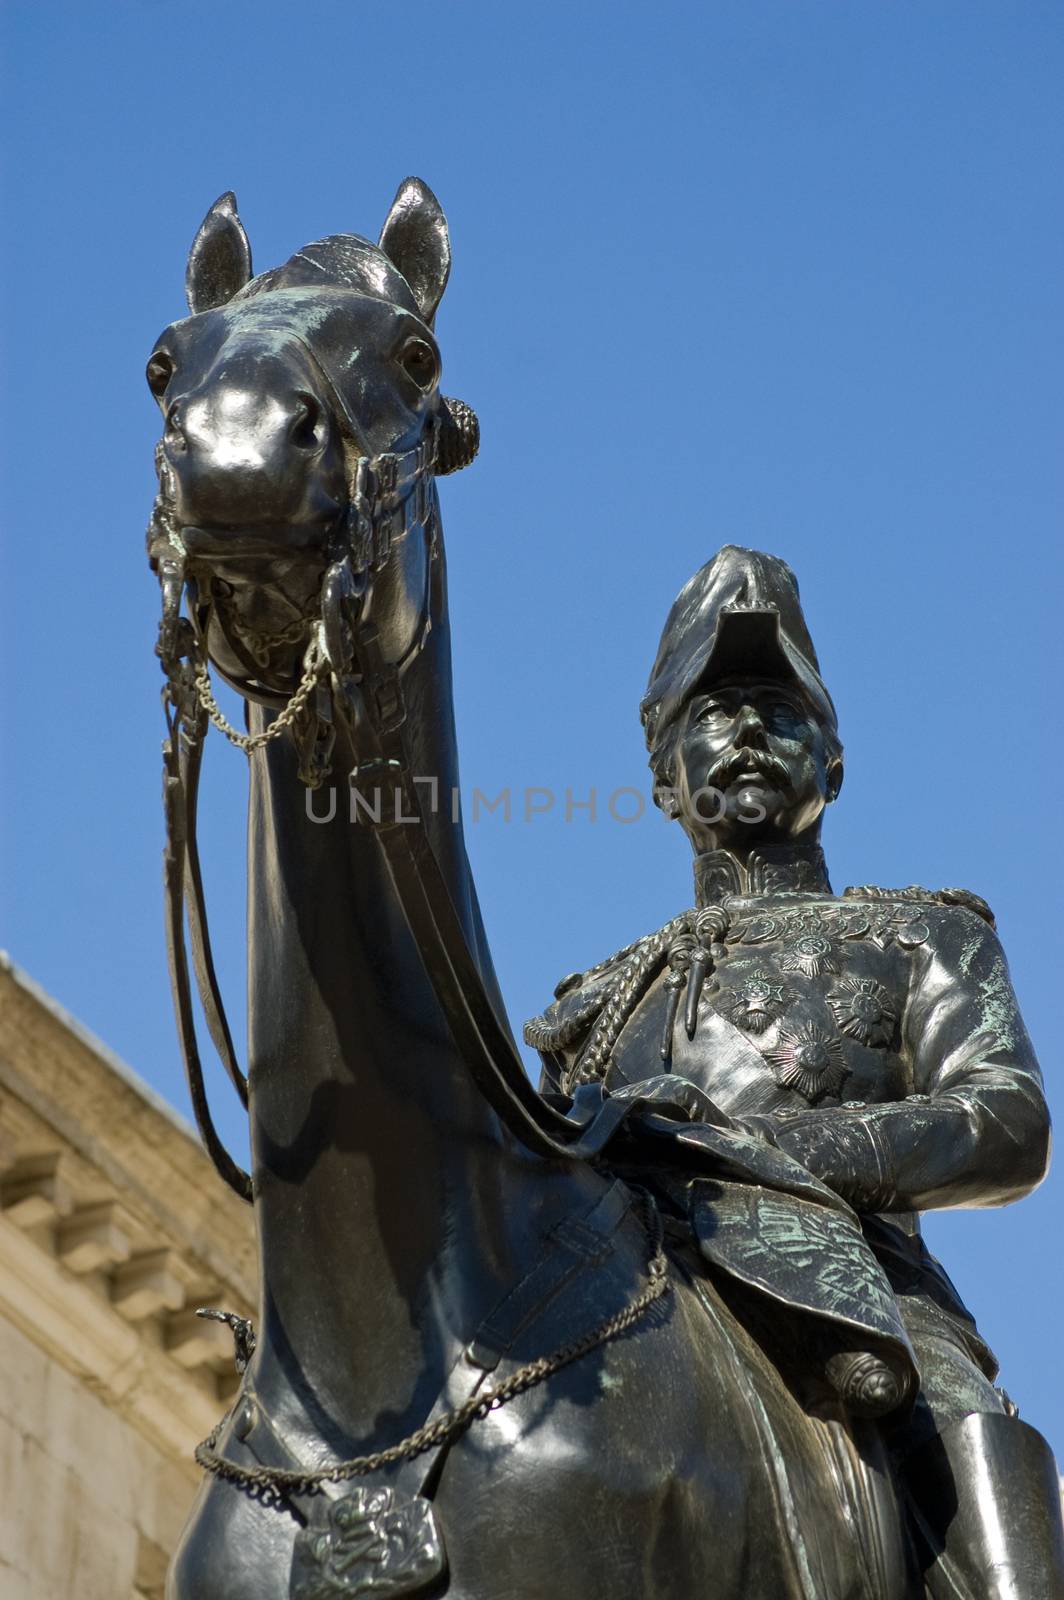 Viscount Garnet Wolseley Statue, Westminster, London by BasPhoto